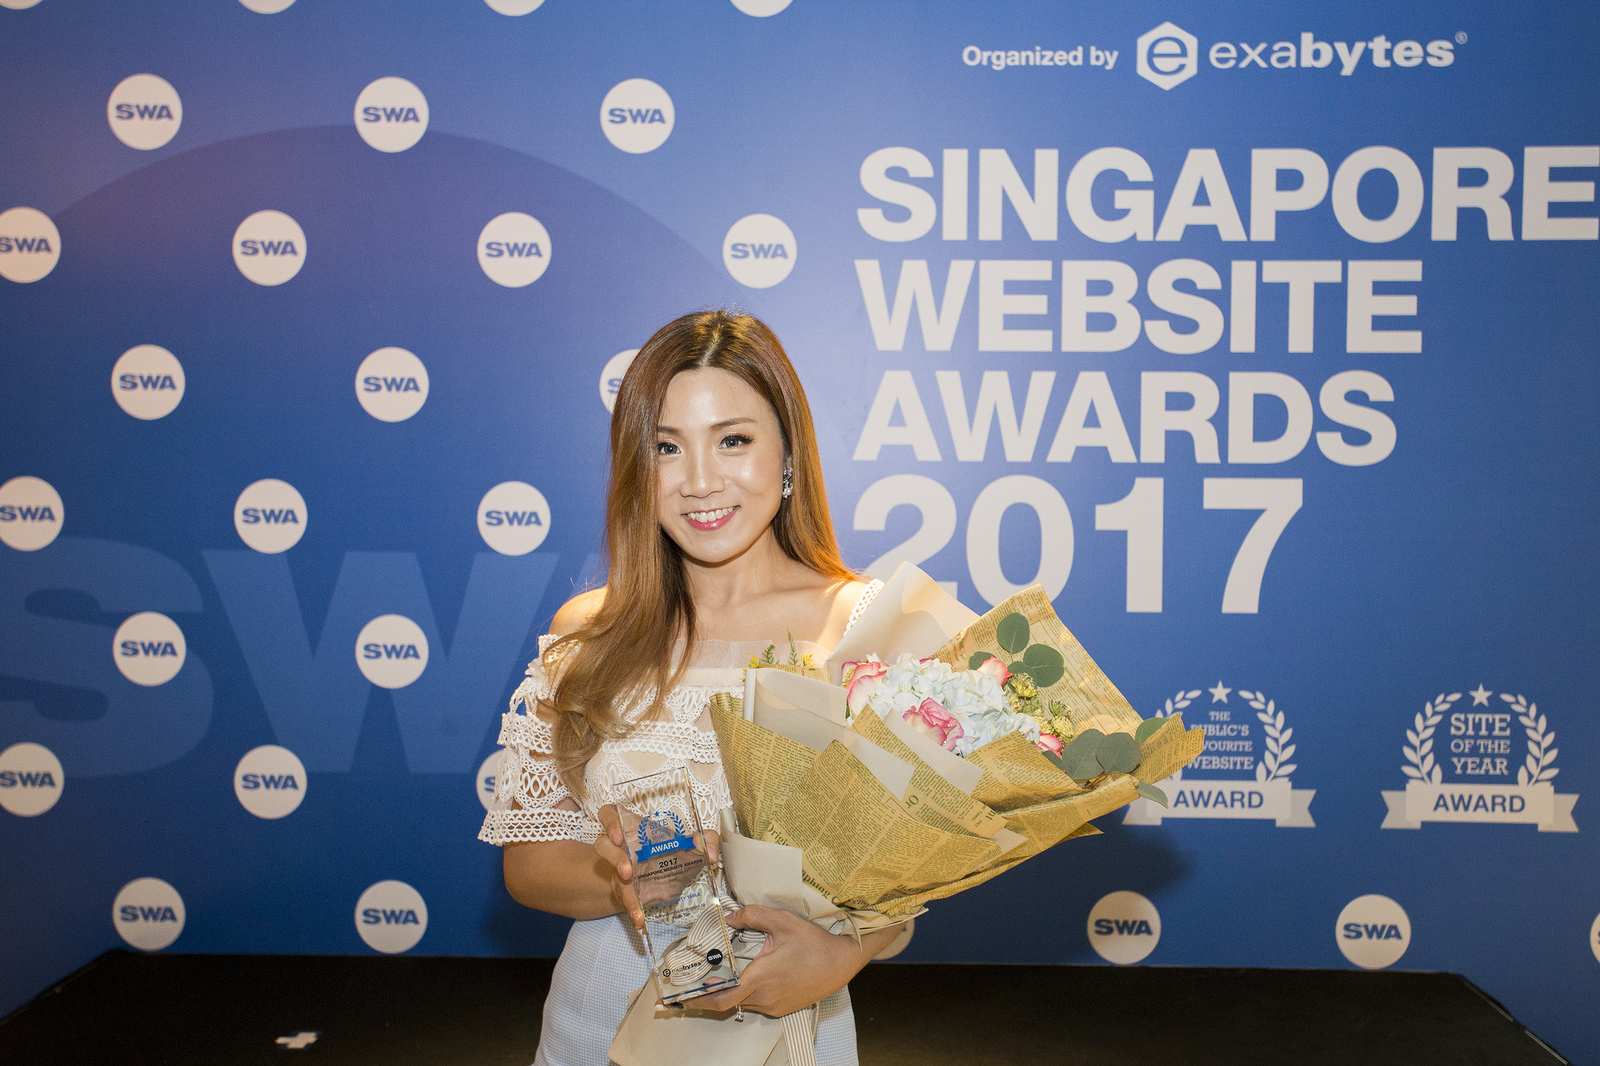 Singapore Website Awards 2017 Winner